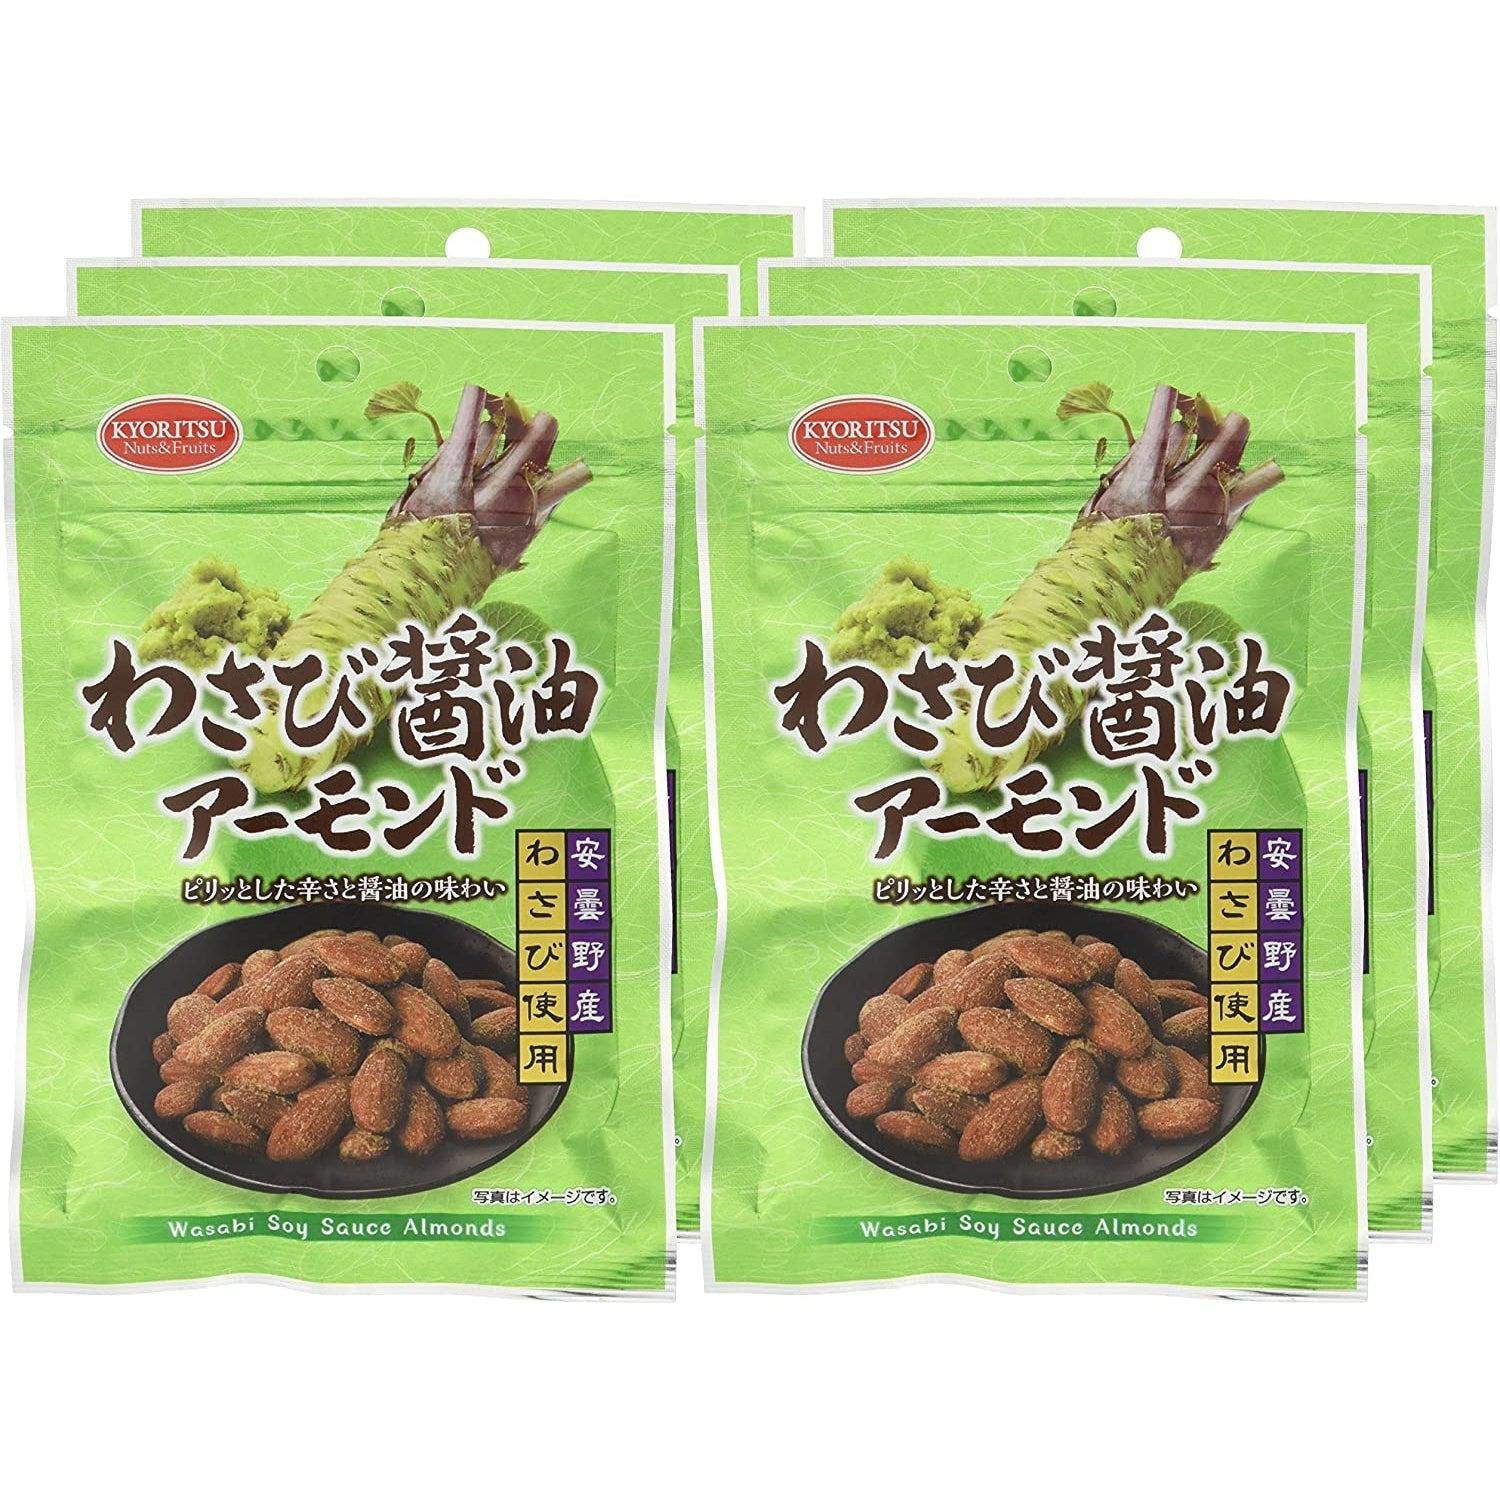 P-1-KYOR-ALMWAS-1:6-Kyoritsu Roasted Almond Snack Wasabi Soy Sauce Flavor 45g (Pack of 6).jpg